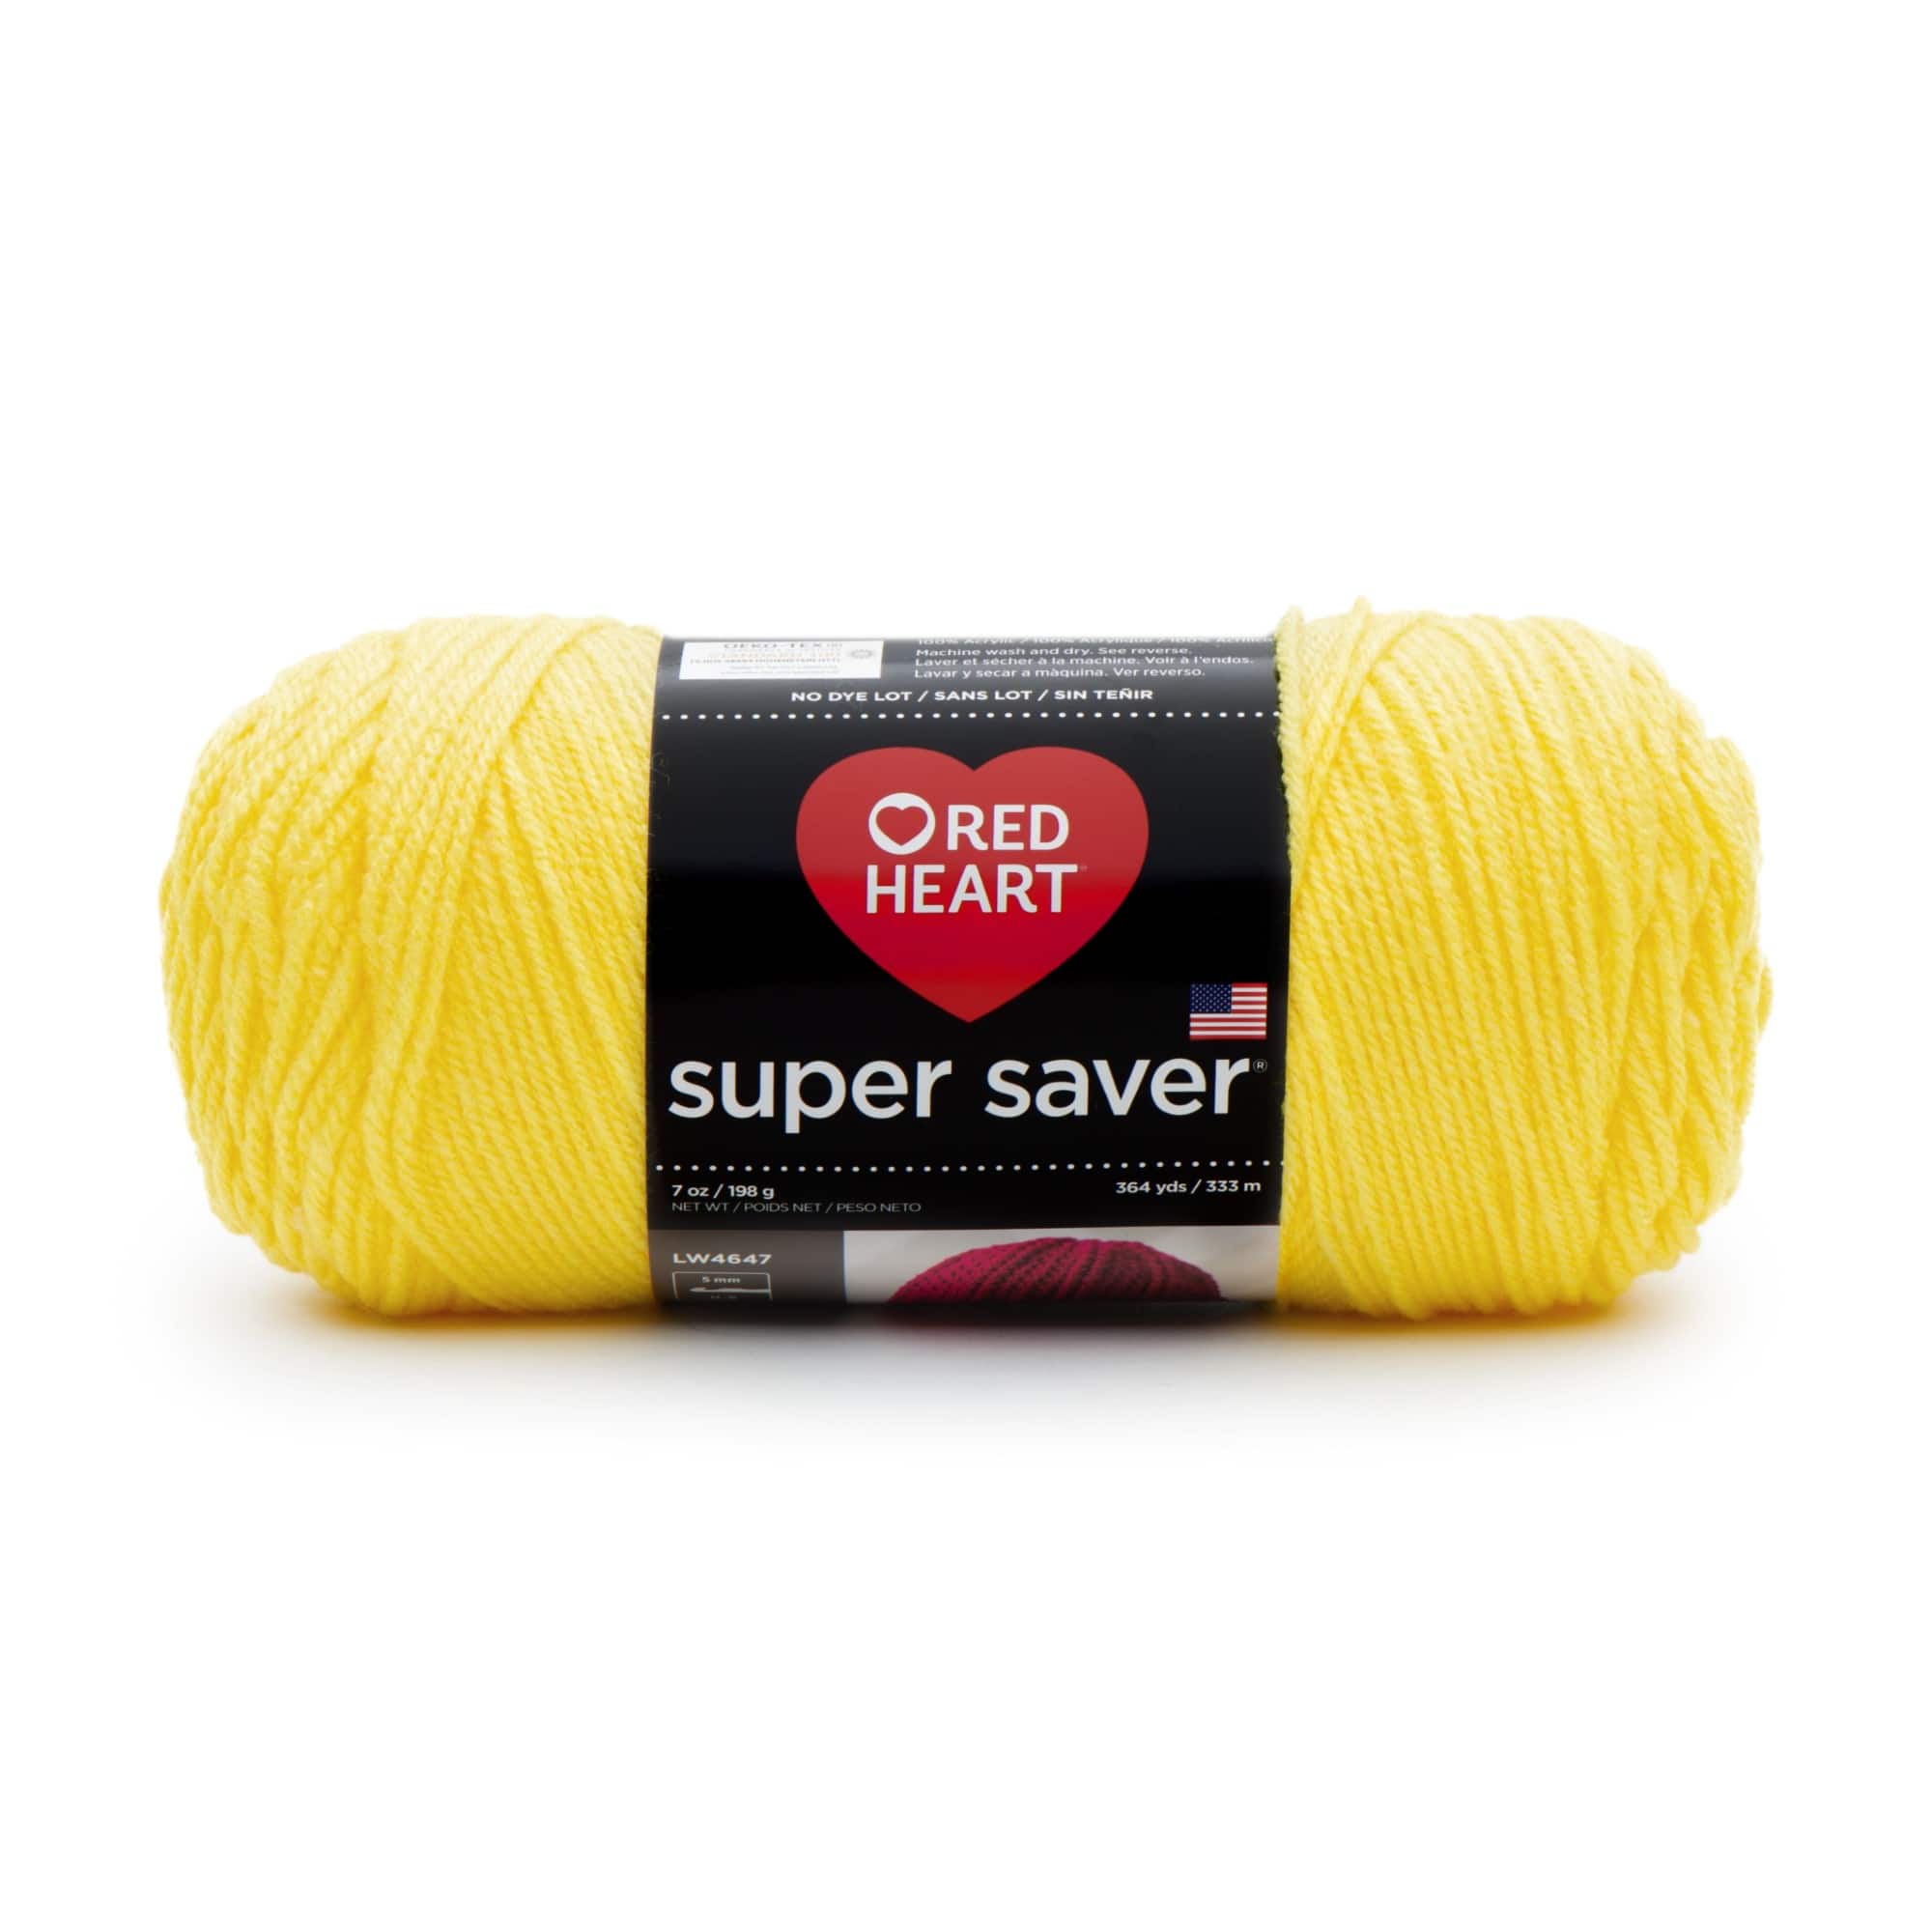 Red Heart Super Saver Color Block Yarn